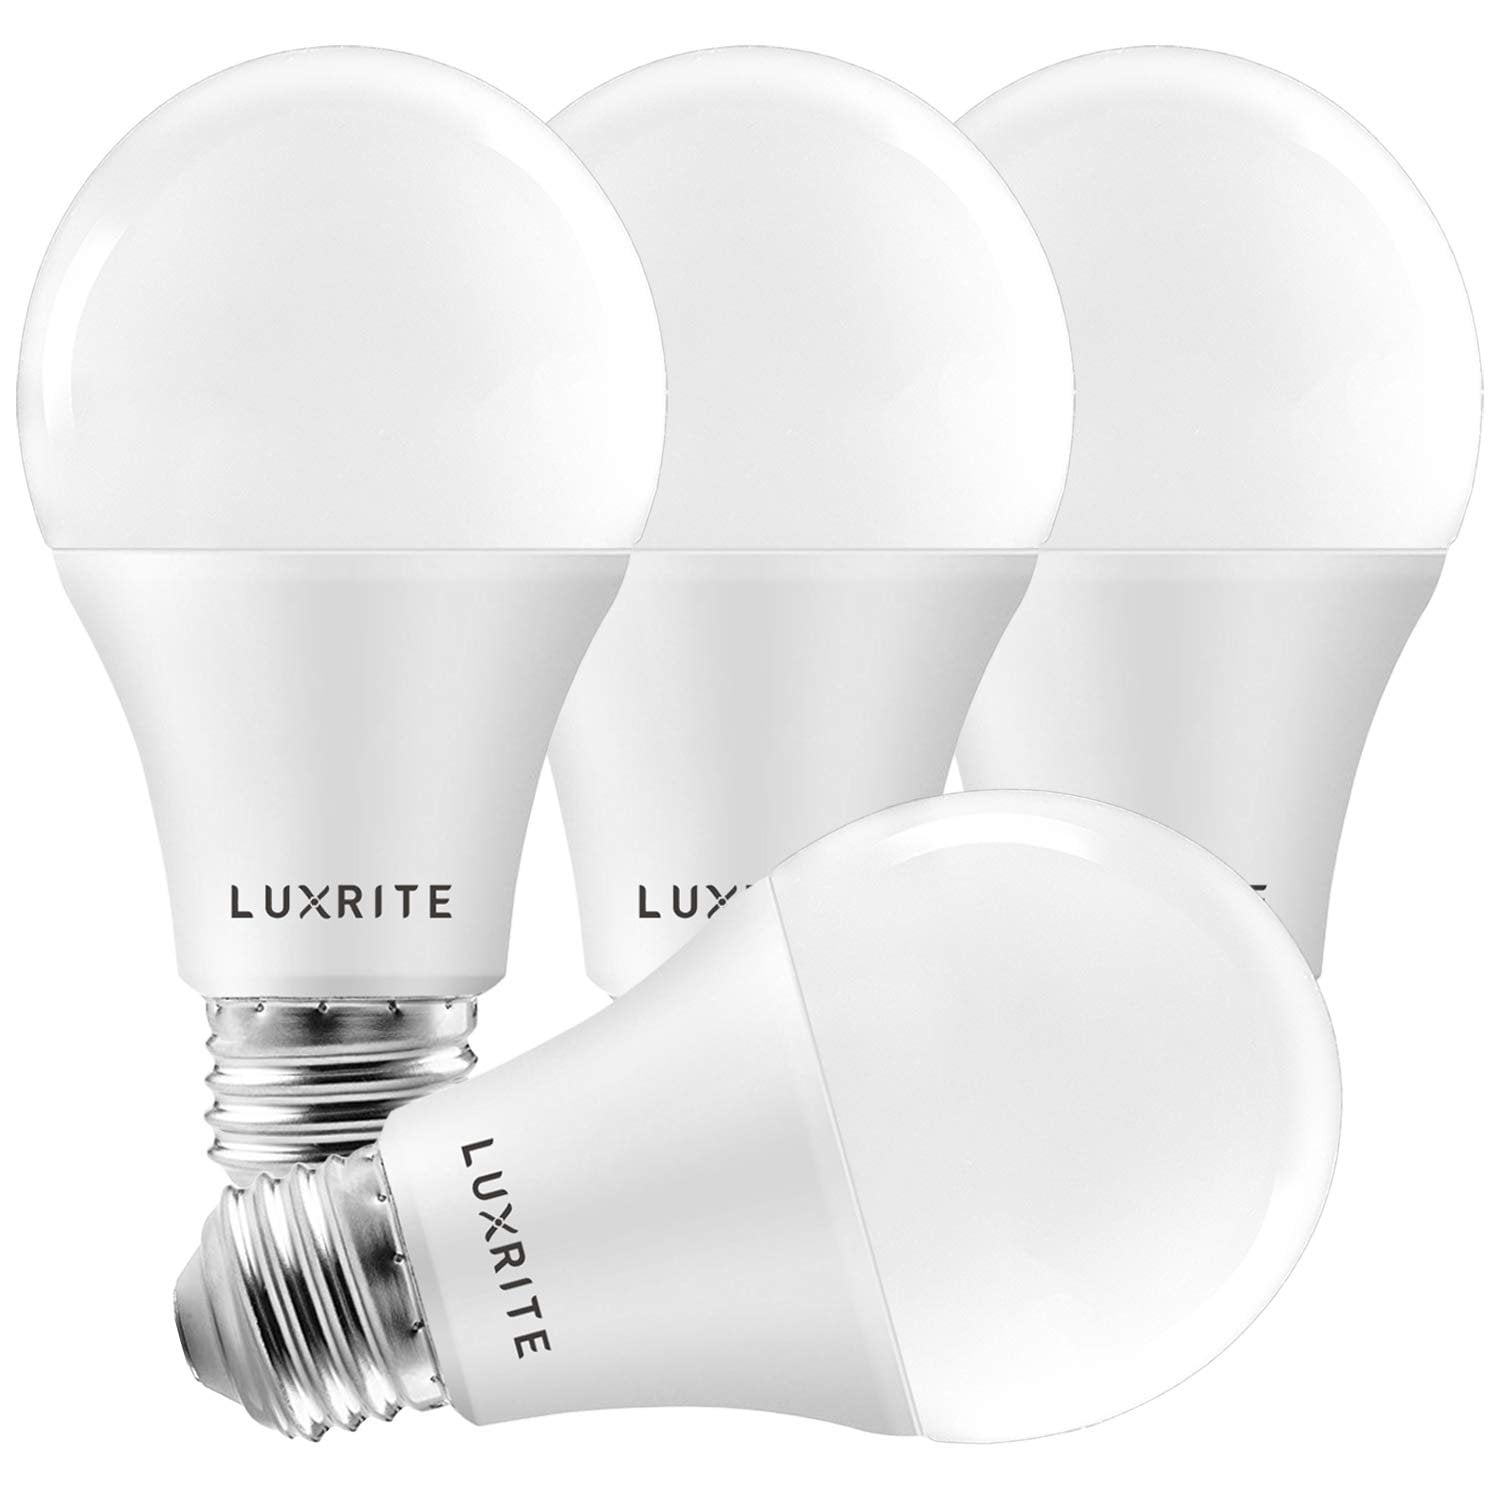 4x Philips LED Light Bulb 2W 25W LED BC B22 2700K Warm White 470 Lumens 